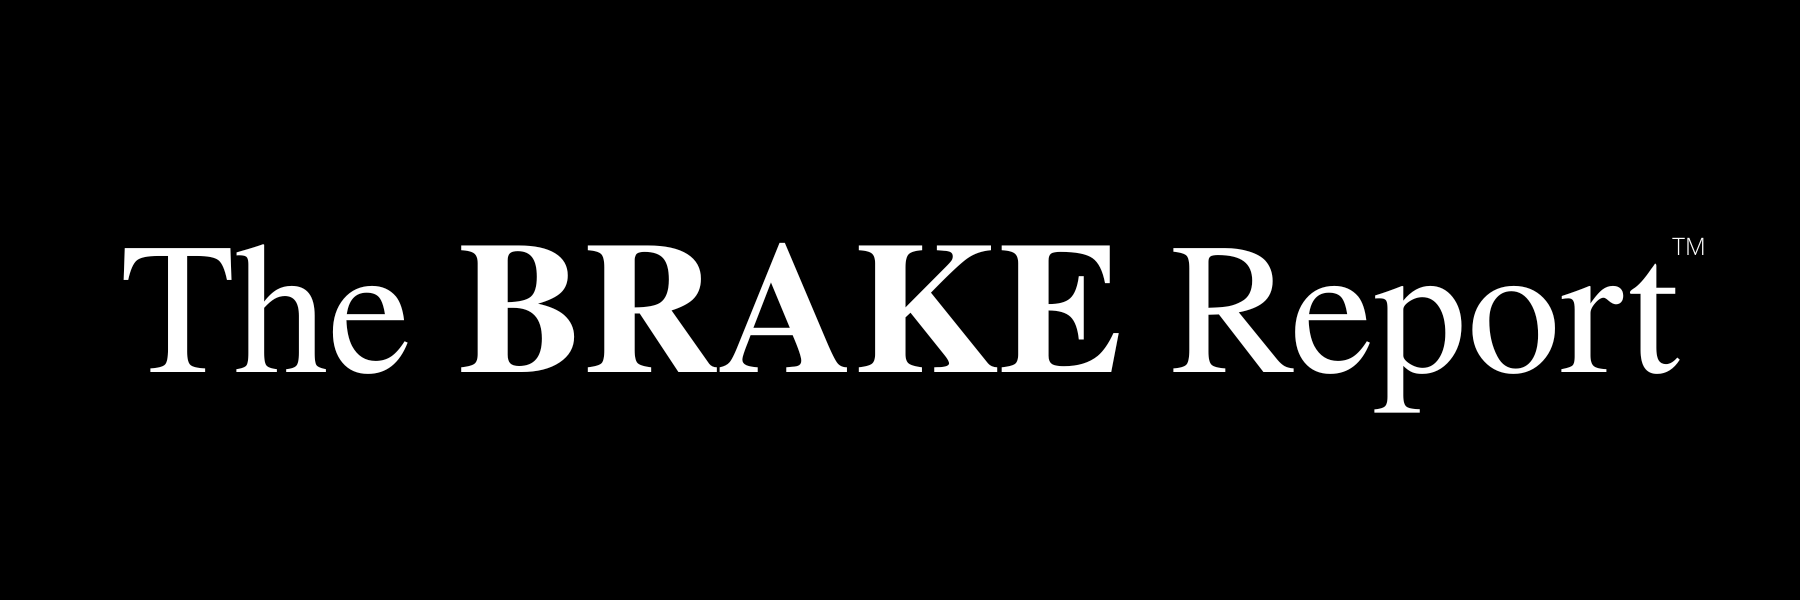 The BRAKE Report